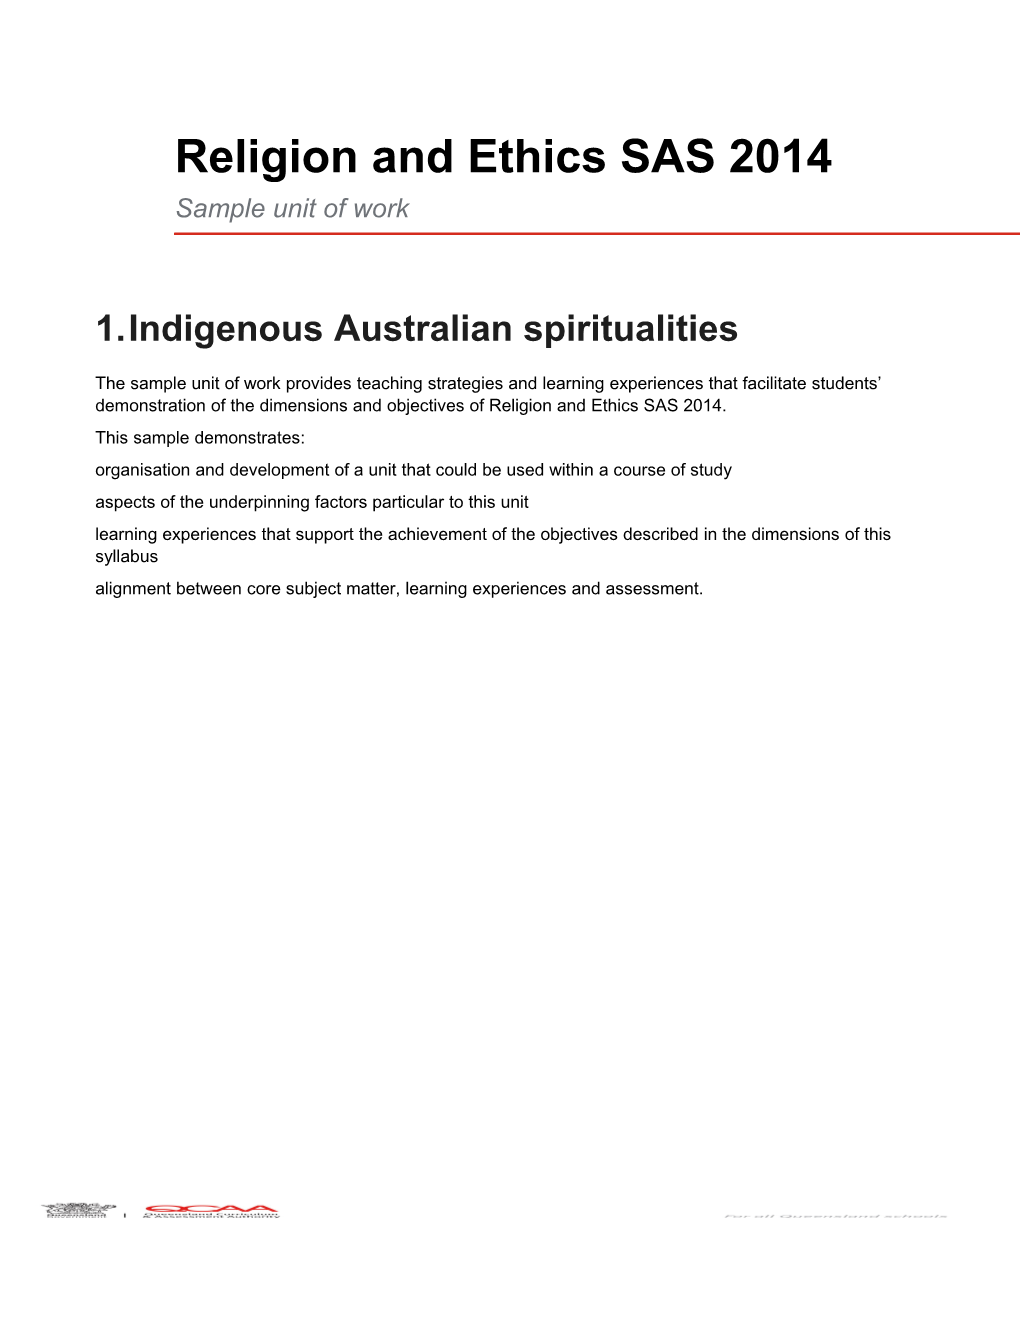 Religion and Ethics SAS (2014) Sample Unit of Work: Indigenous Australian Spiritualities